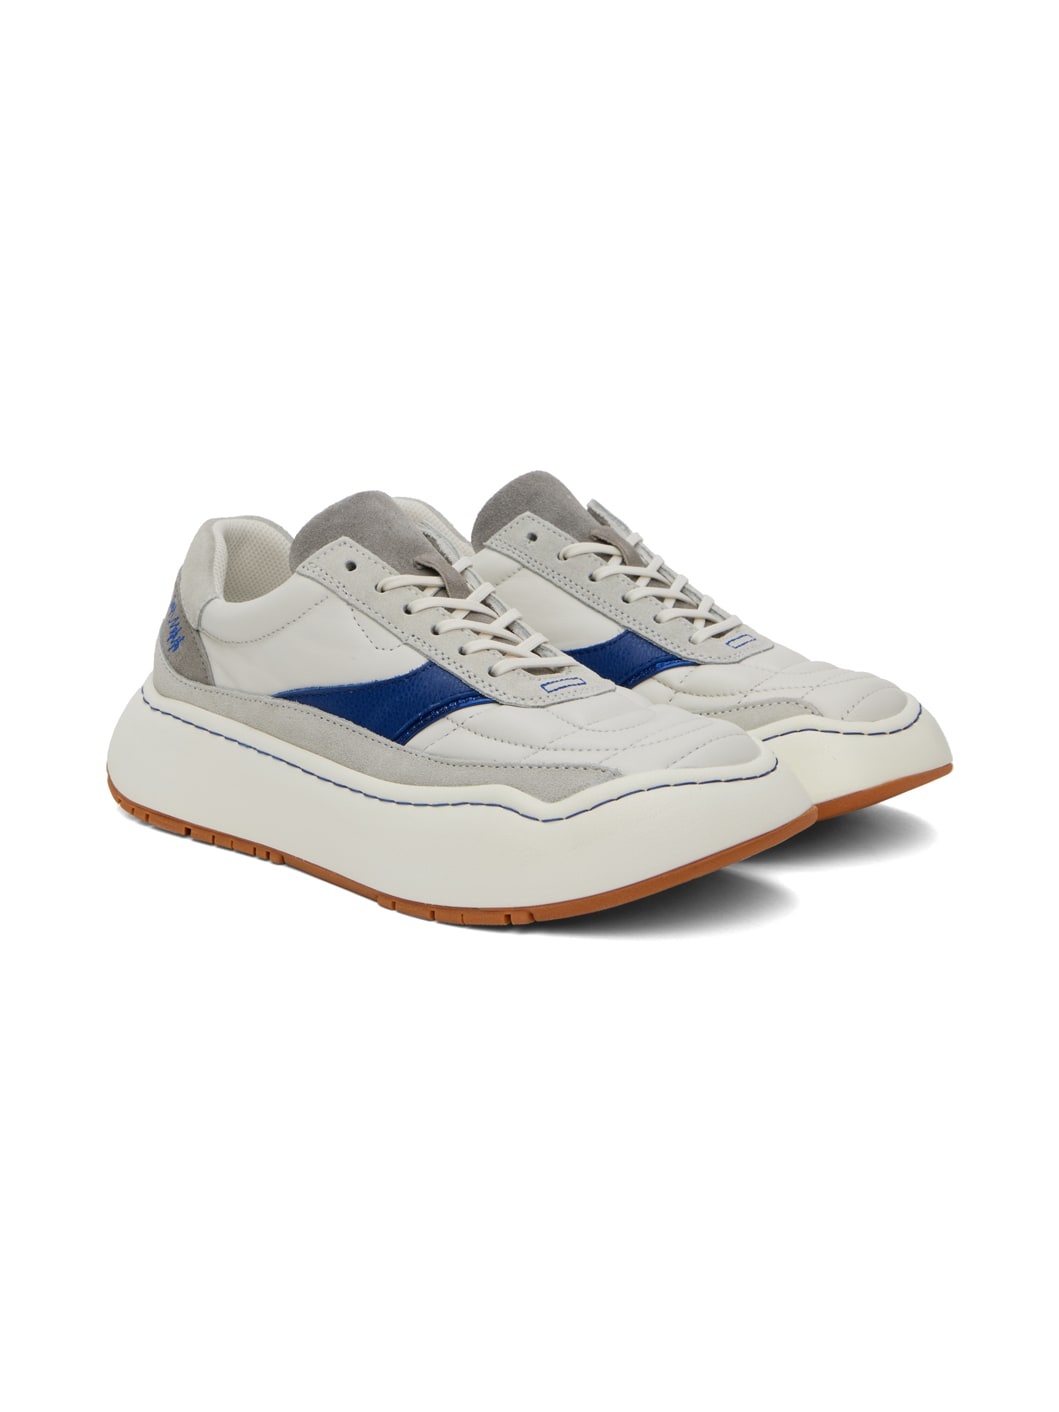 Off-White & Gray Log WEM Sneakers - 4